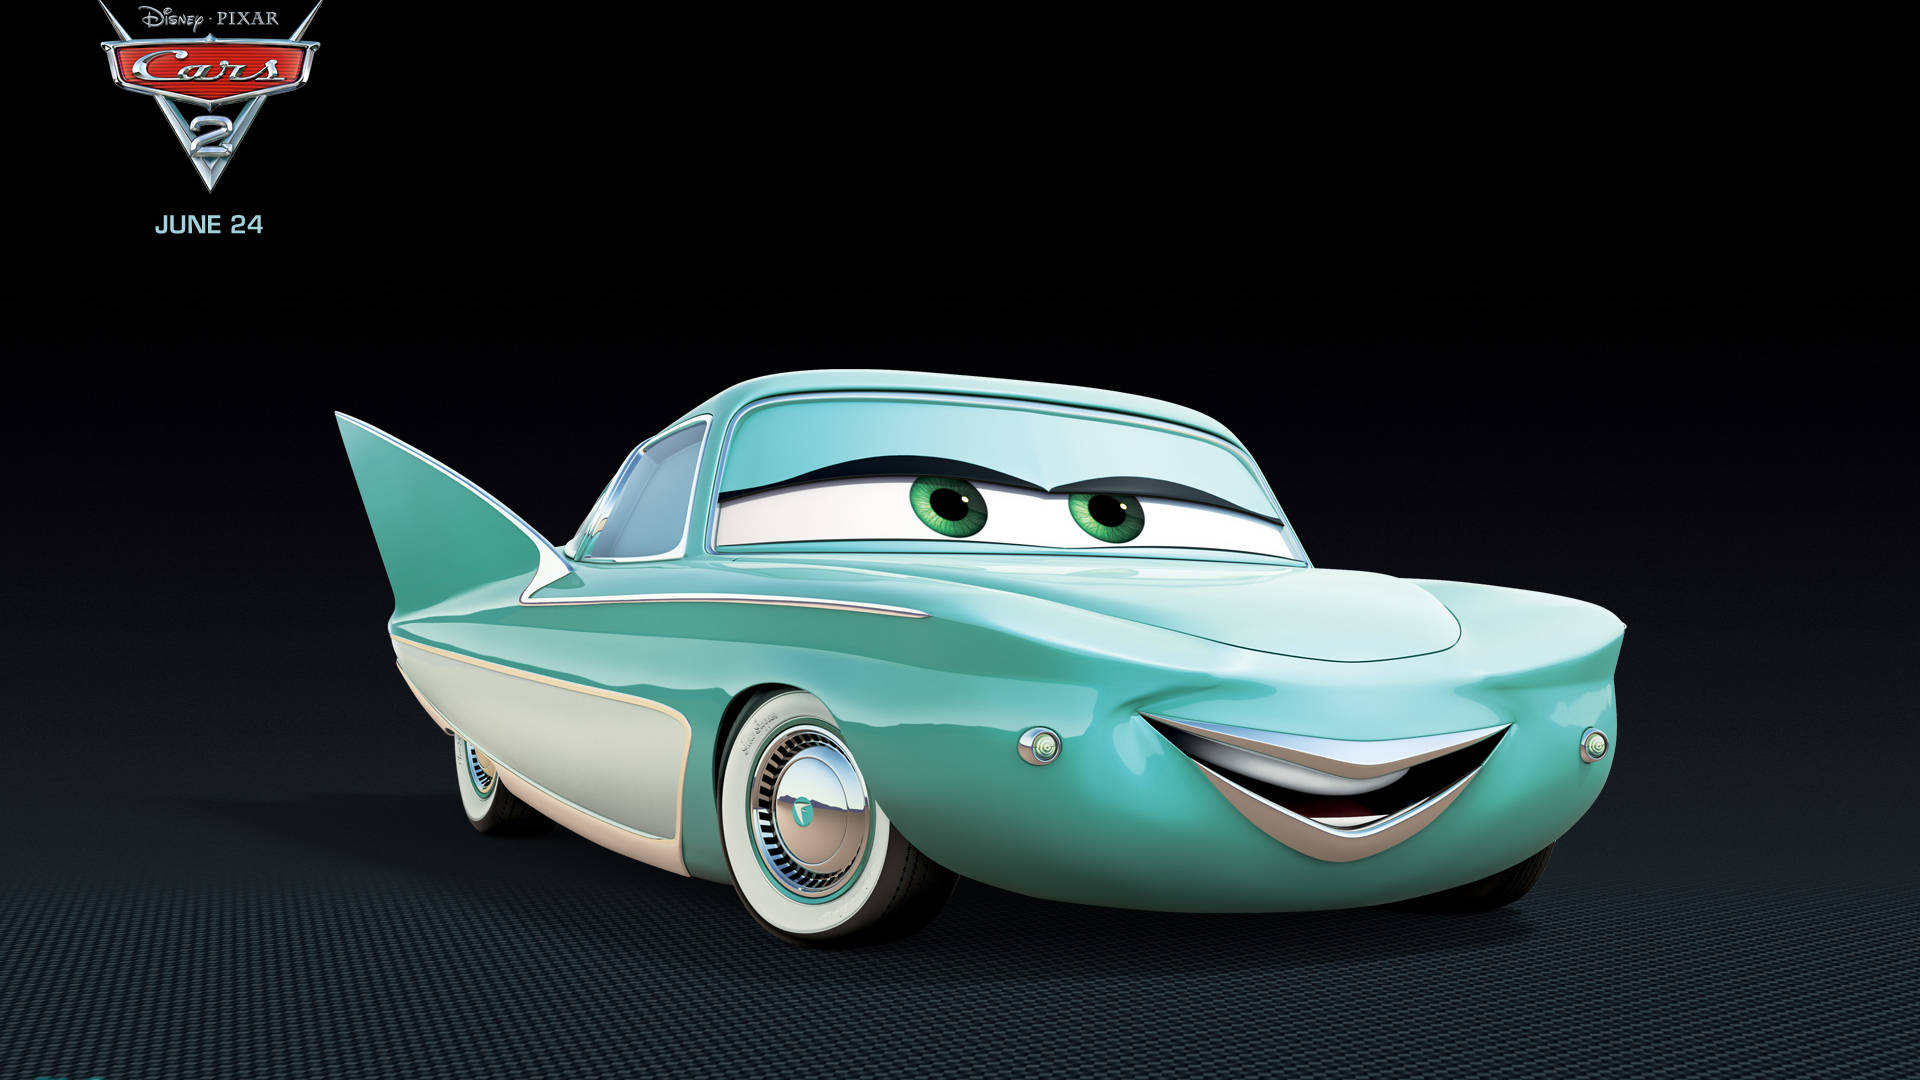 Flo From Pixar's Cars Wallpaper